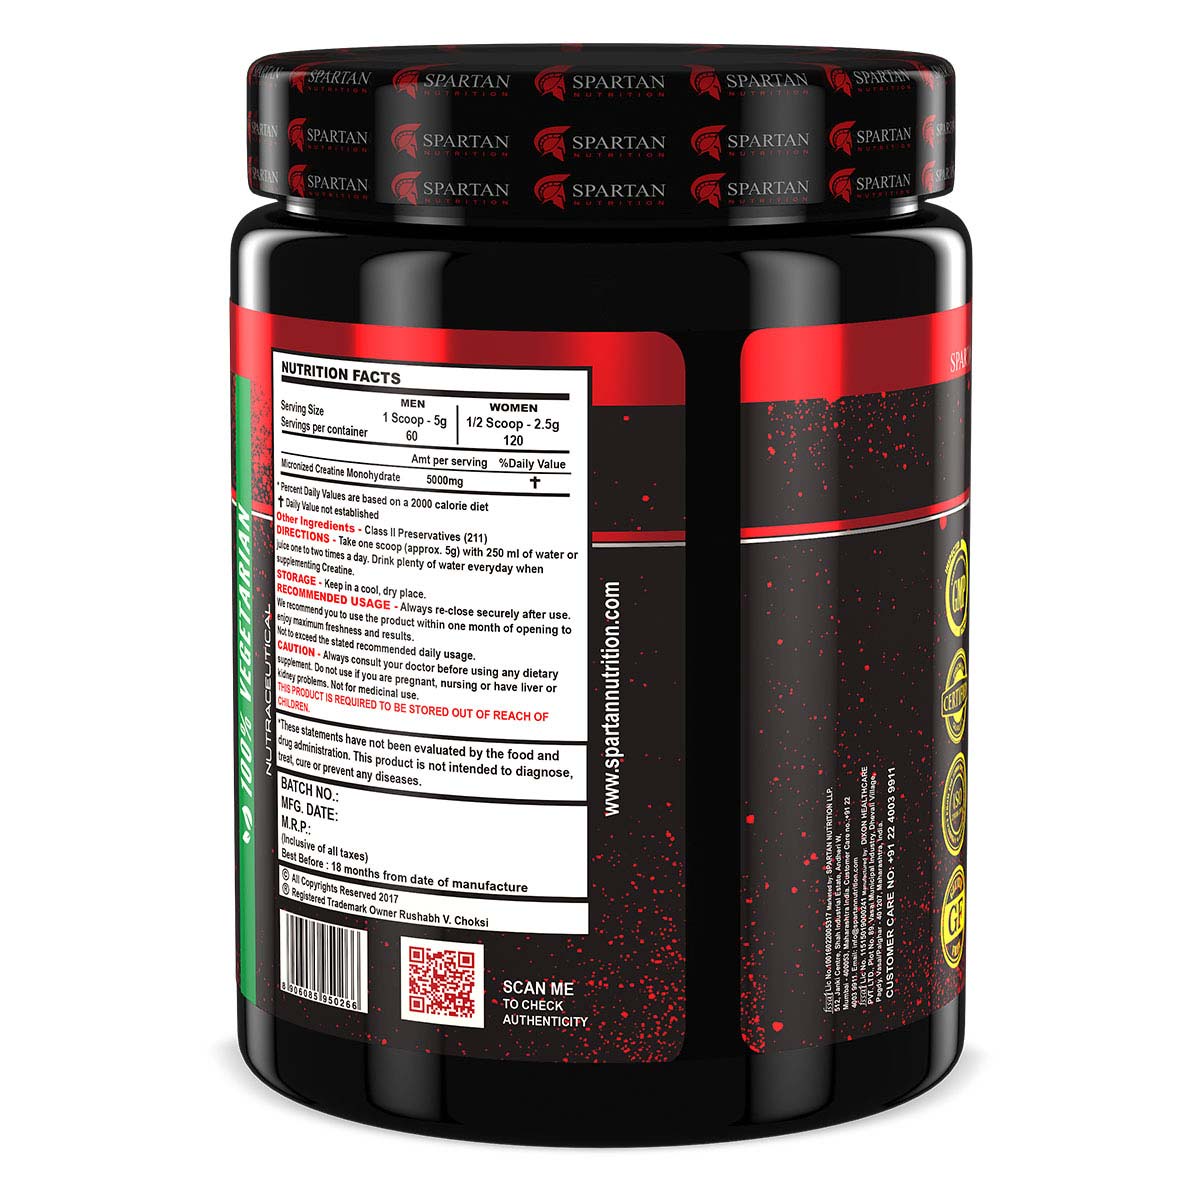 Spartan Nutrition Creaking Pro Series Protein Sports Supplements Creatine Monohydrate 300g